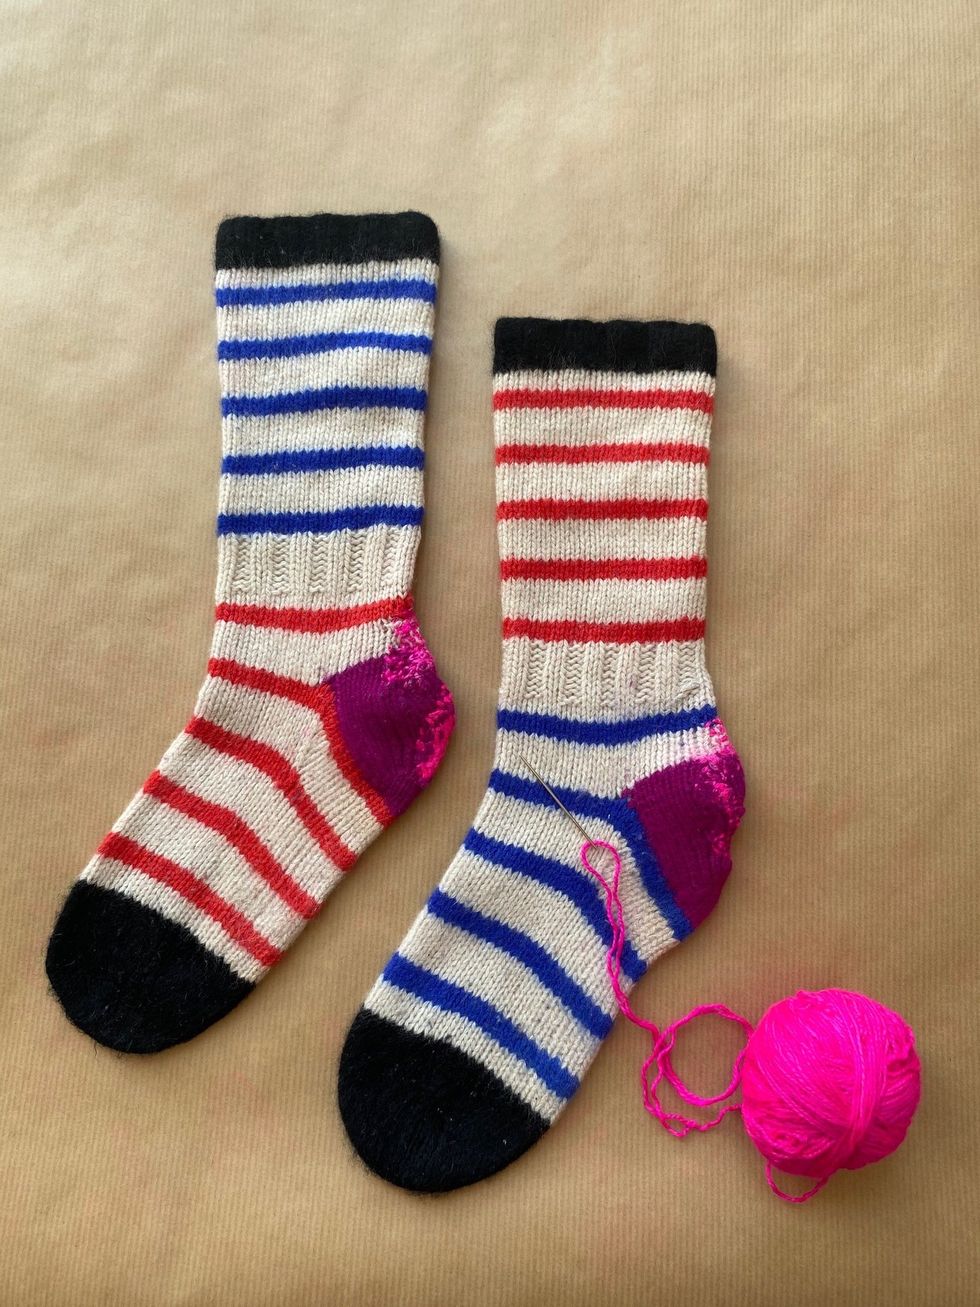 Sock, Wool, Product, Blue, Red, Pink, Footwear, Woolen, Knitting, Fashion accessory, 